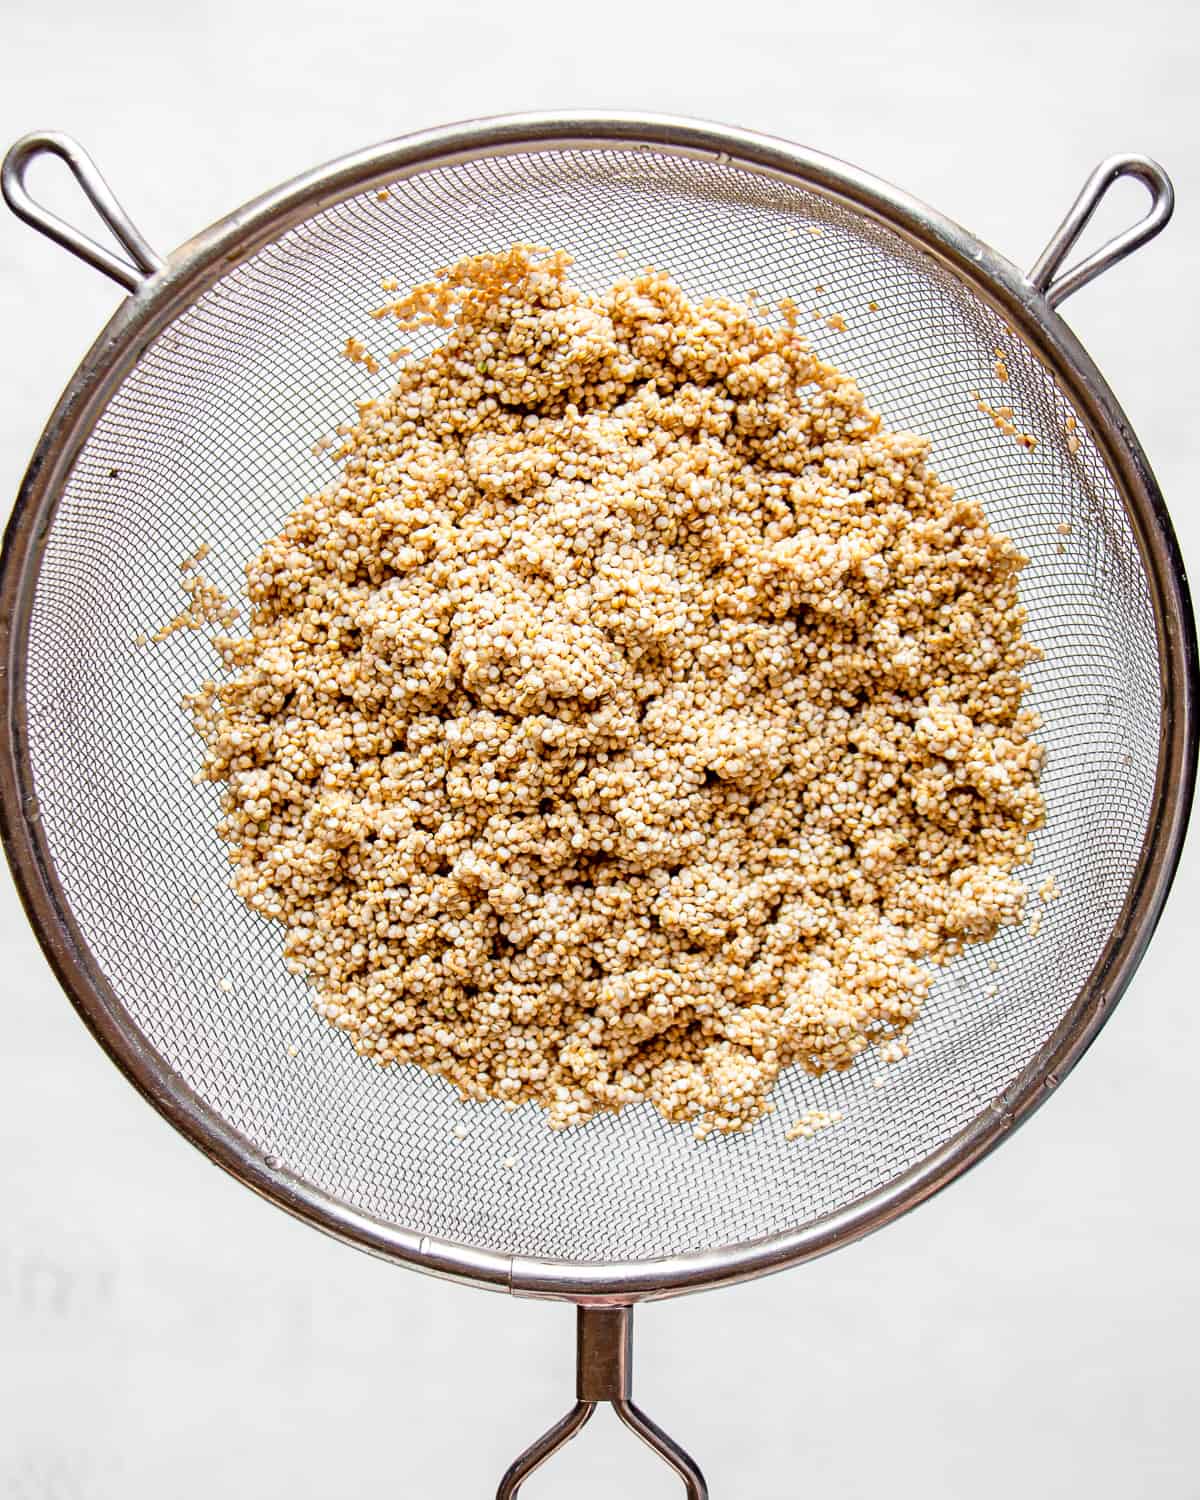 Rinsed white quinoa in a fine-mesh sieve.